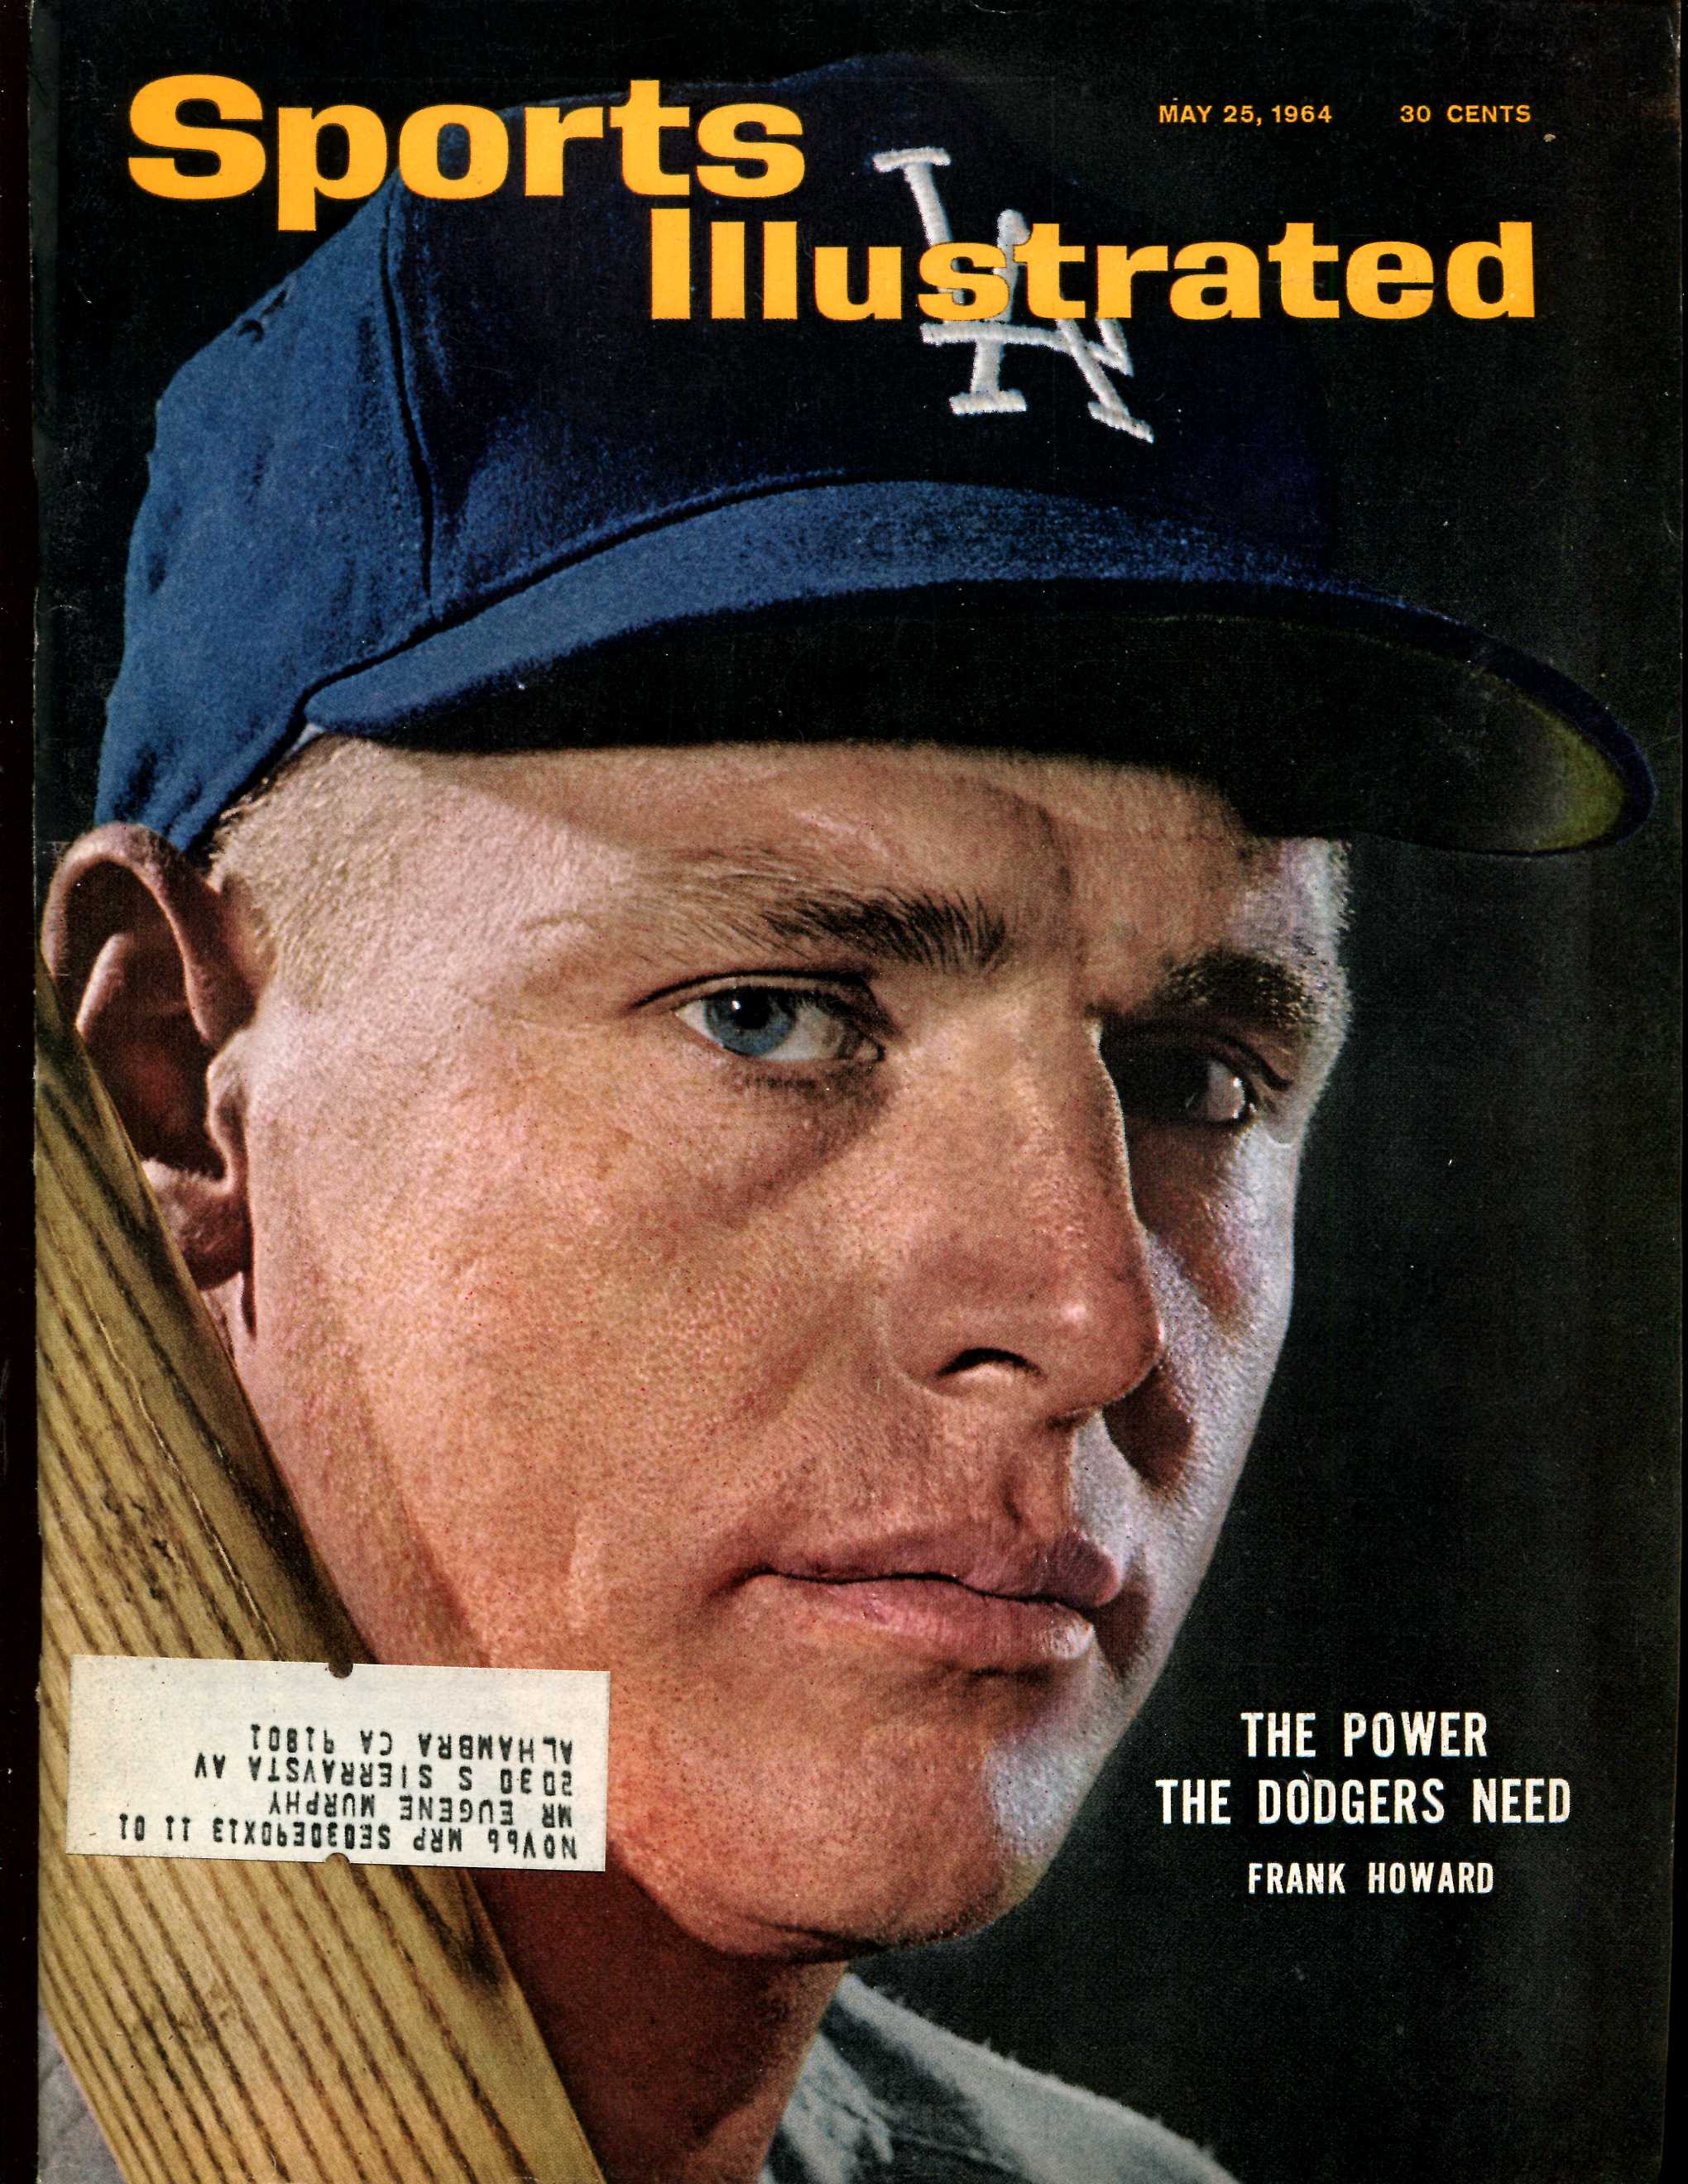 Sports Illustrated (1964/05/25) - Frank Howard cover (Dodgers) Baseball cards value